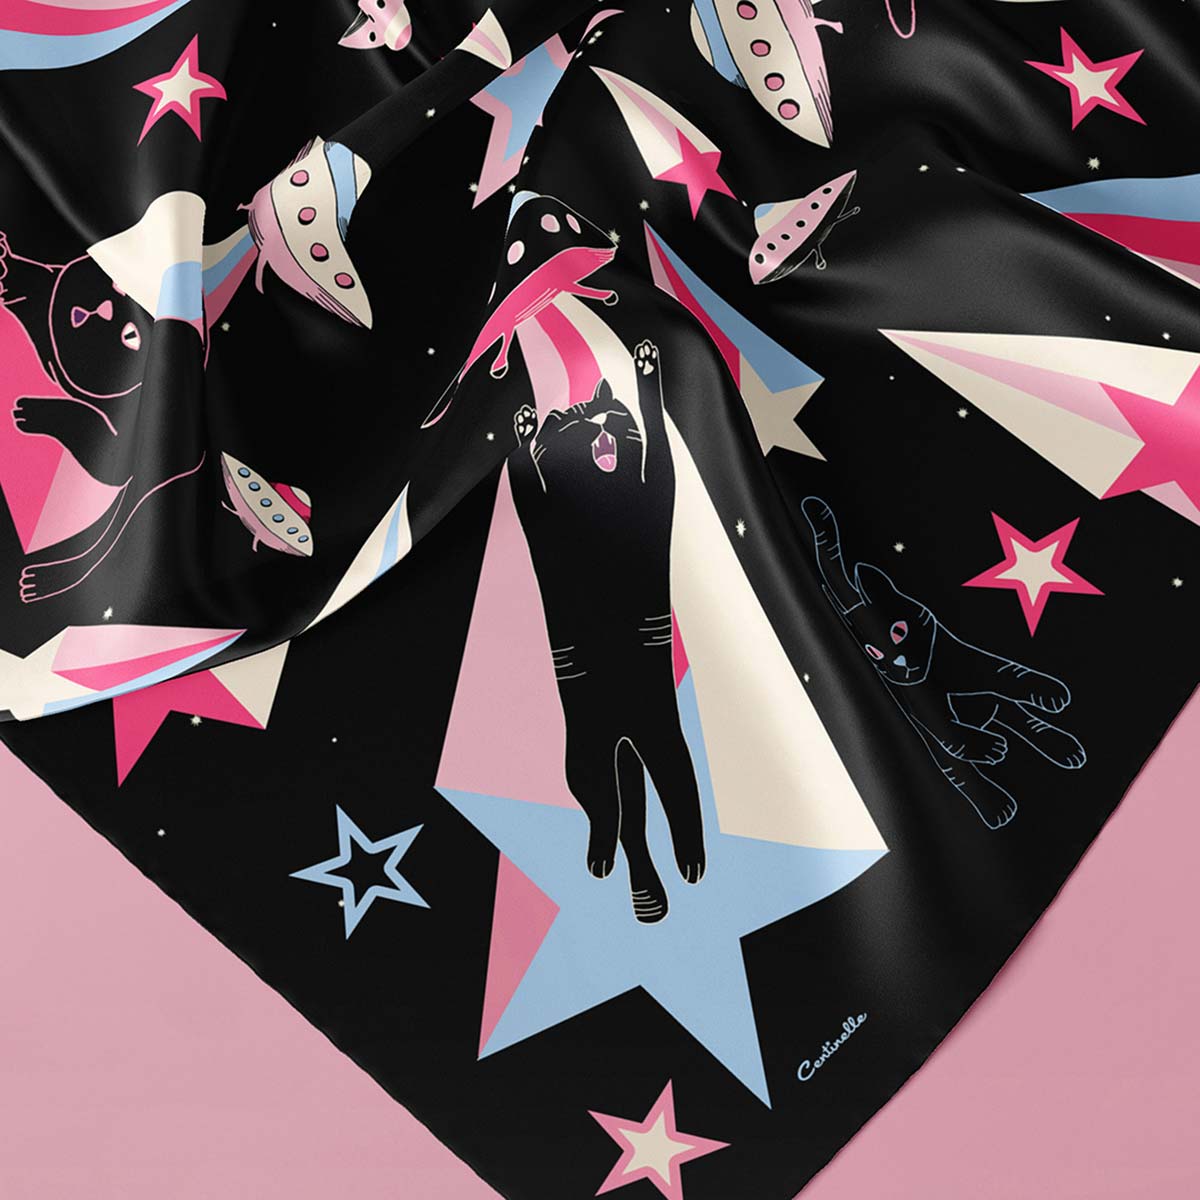 Blue and pink stars and black cats on black silk bandana.